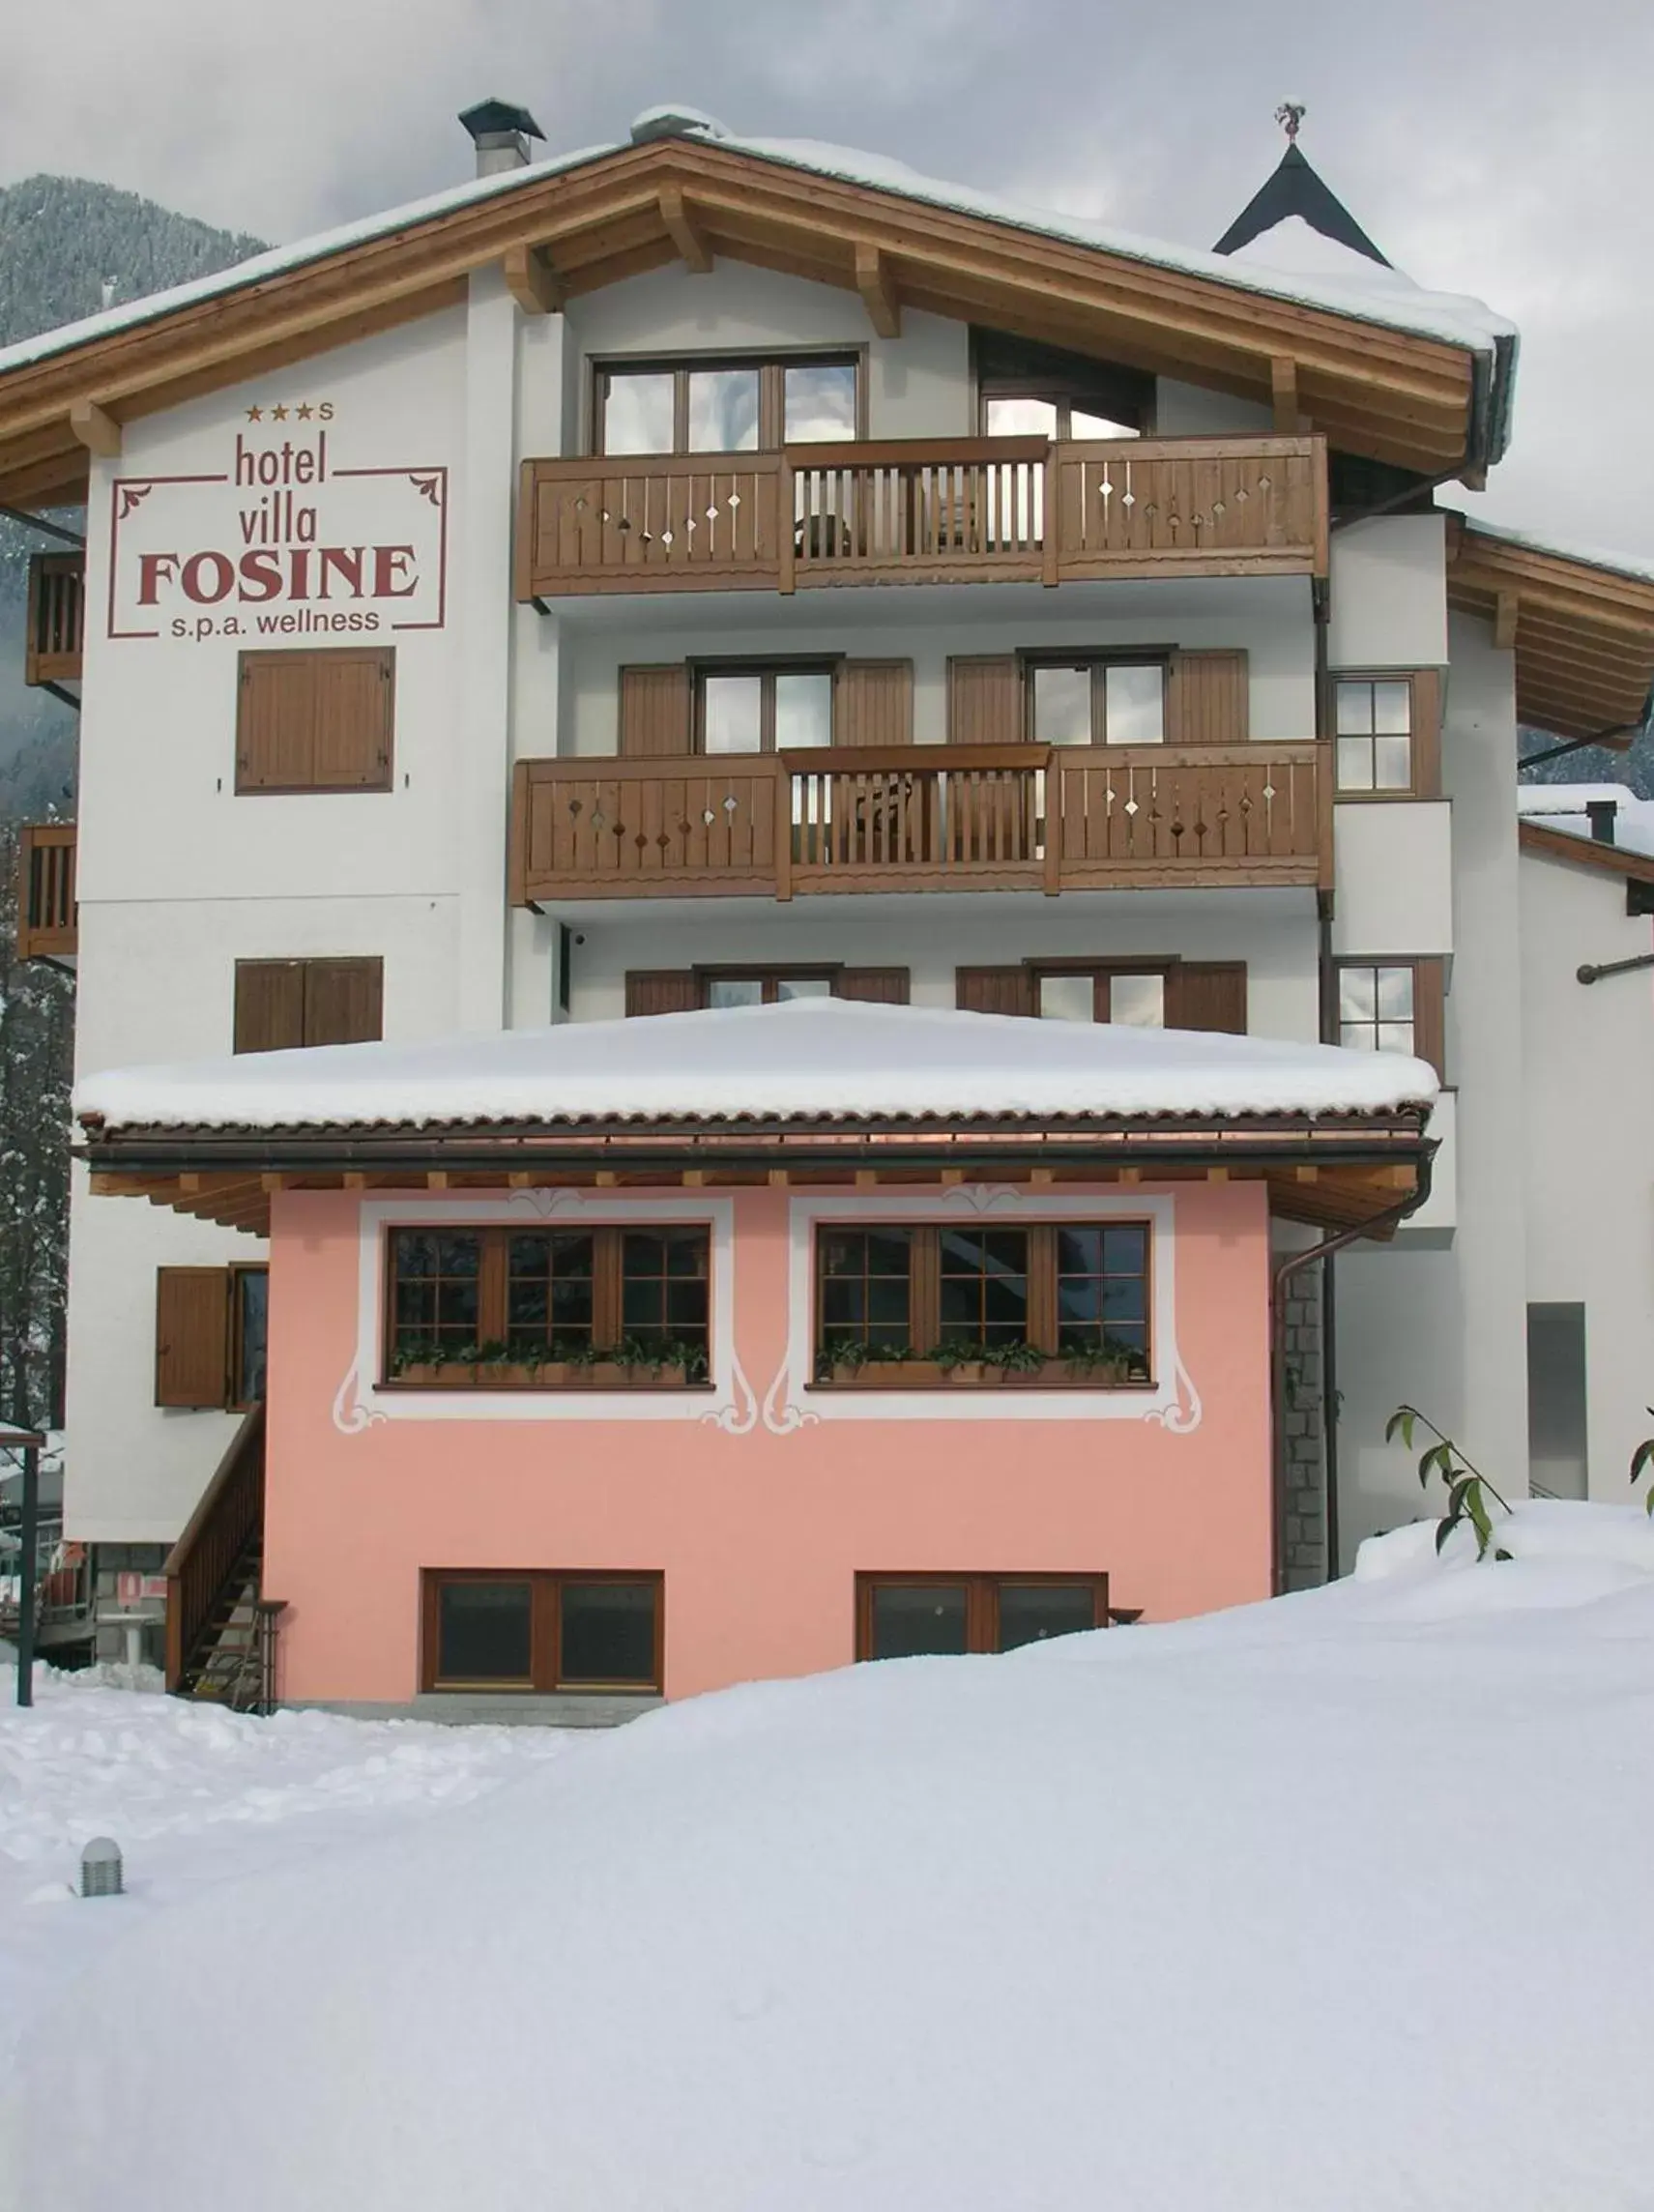 Property building, Winter in Hotel Villa Fosine